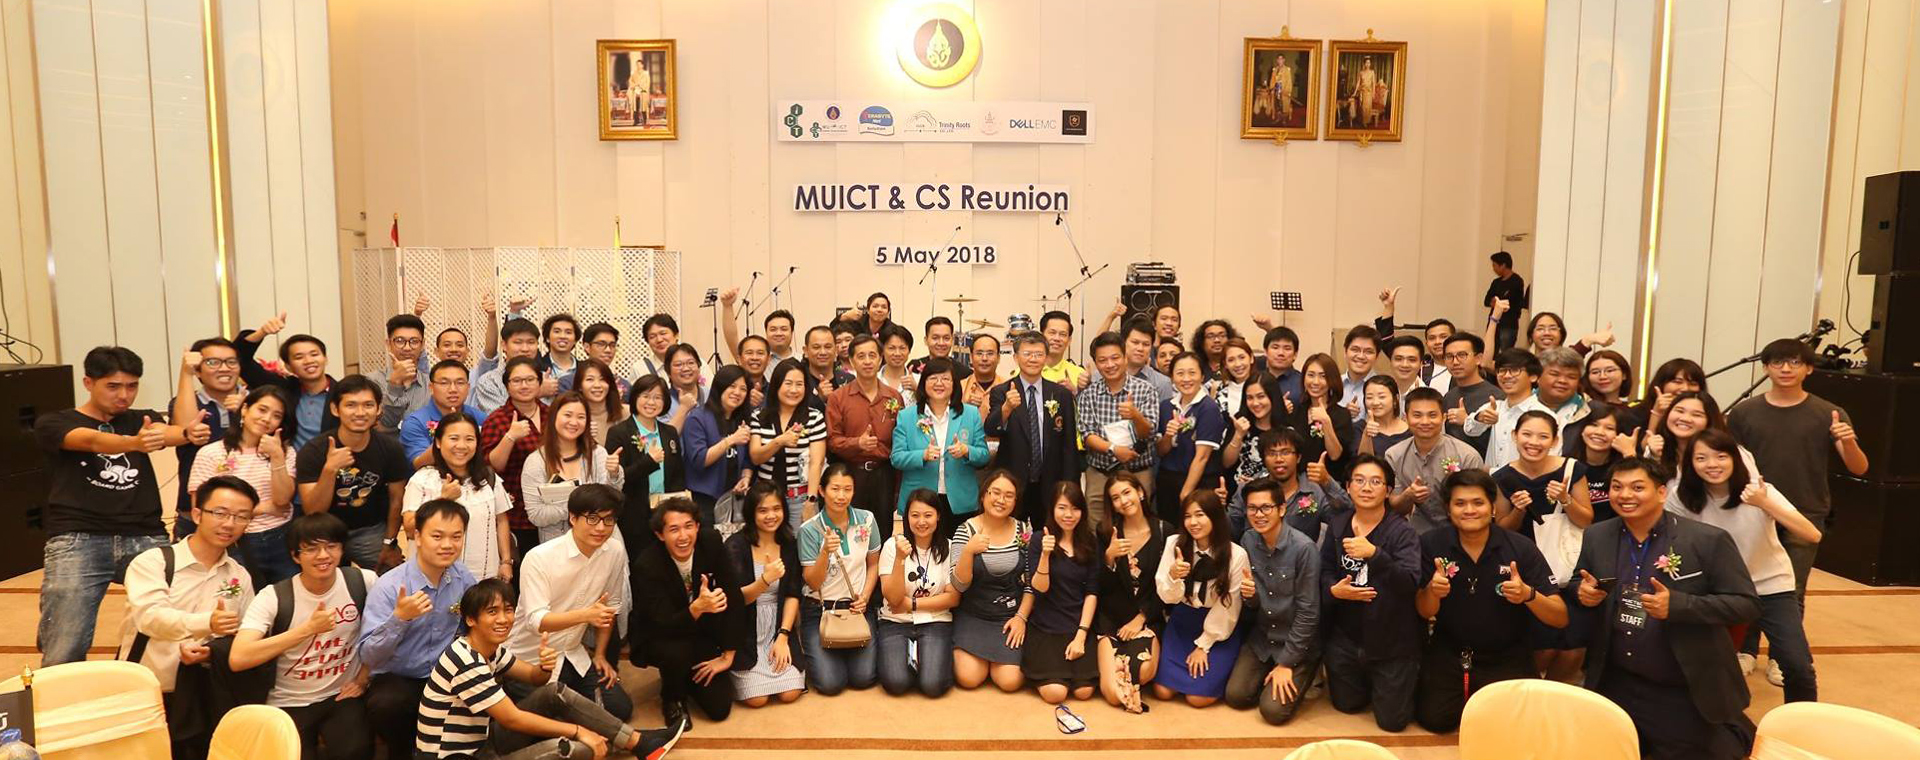 MUICT & CS Reunion 2018